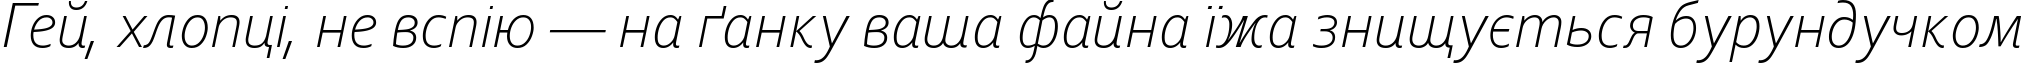 Пример написания шрифтом Corbel Light Italic текста на украинском